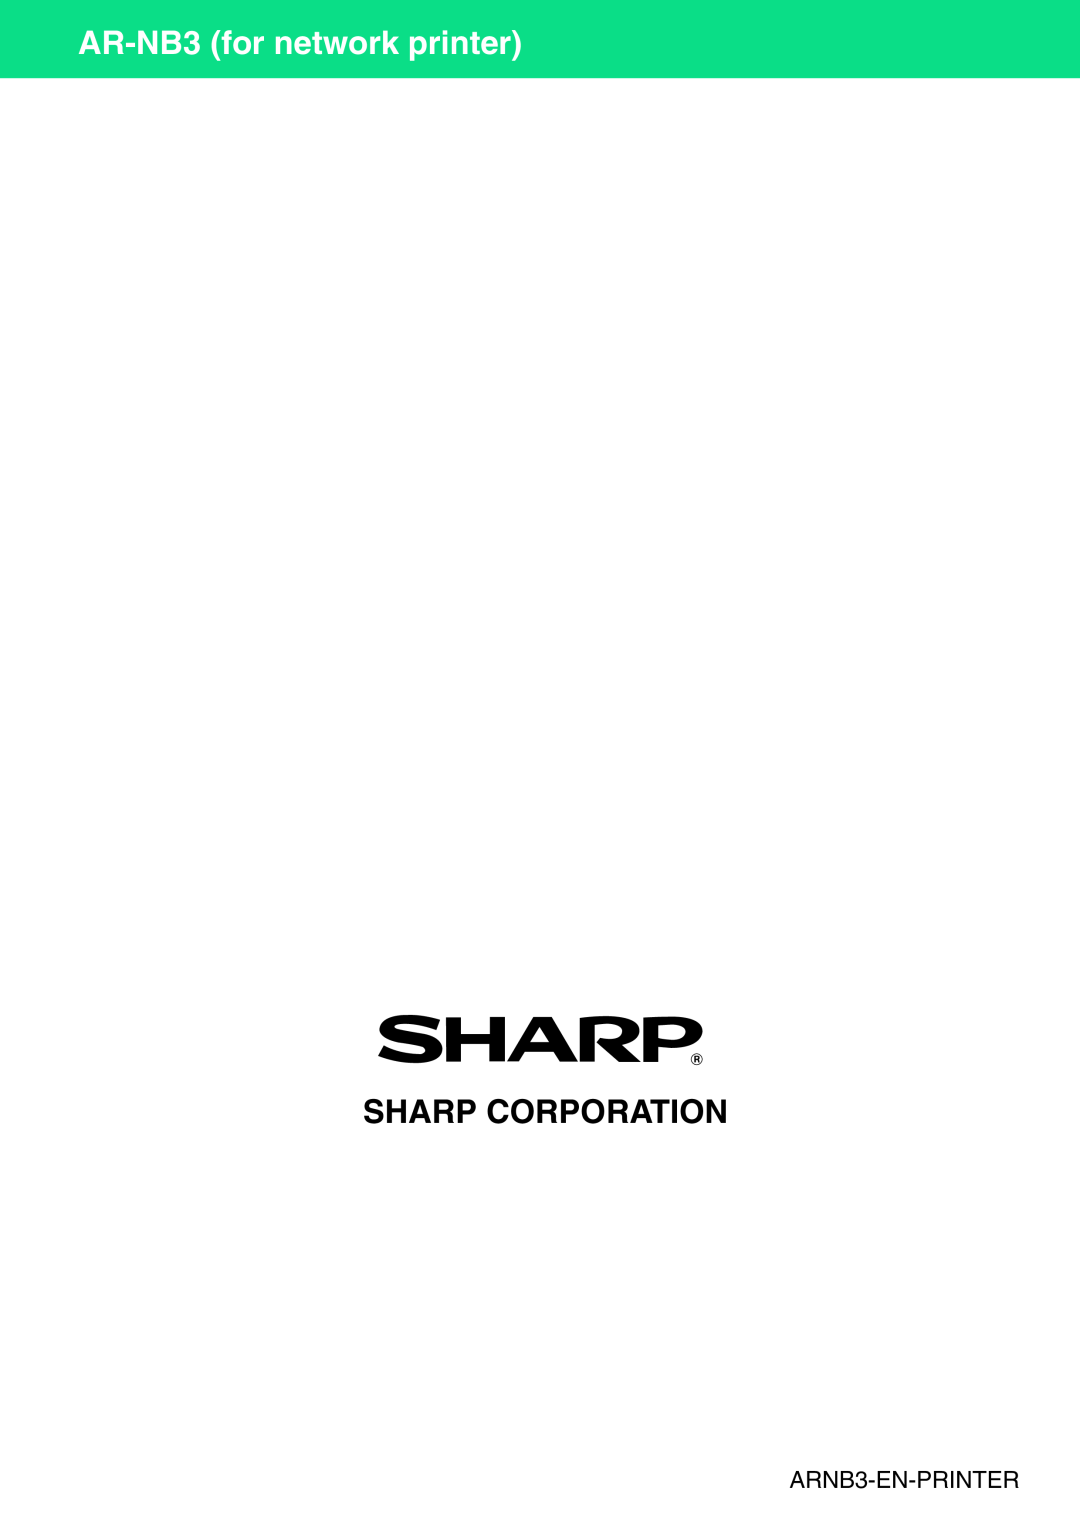 Sharp operation manual AR-NB3 for network printer, Sharp Corporation, ARNB3-EN-PRINTER 